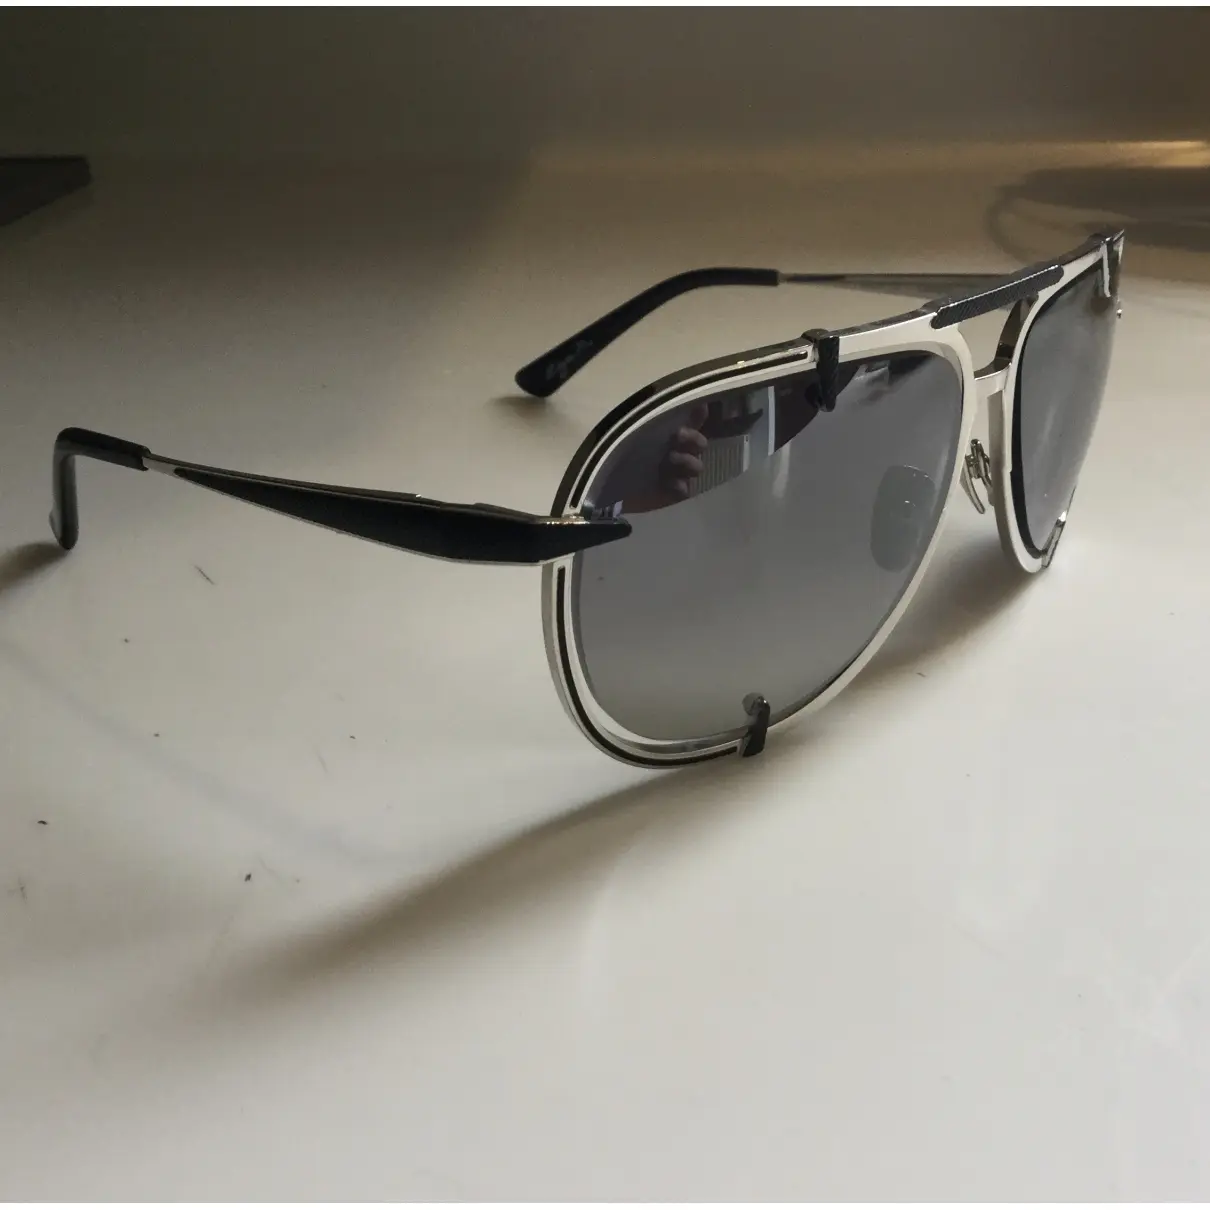 Frency & Mercury Aviator sunglasses for sale